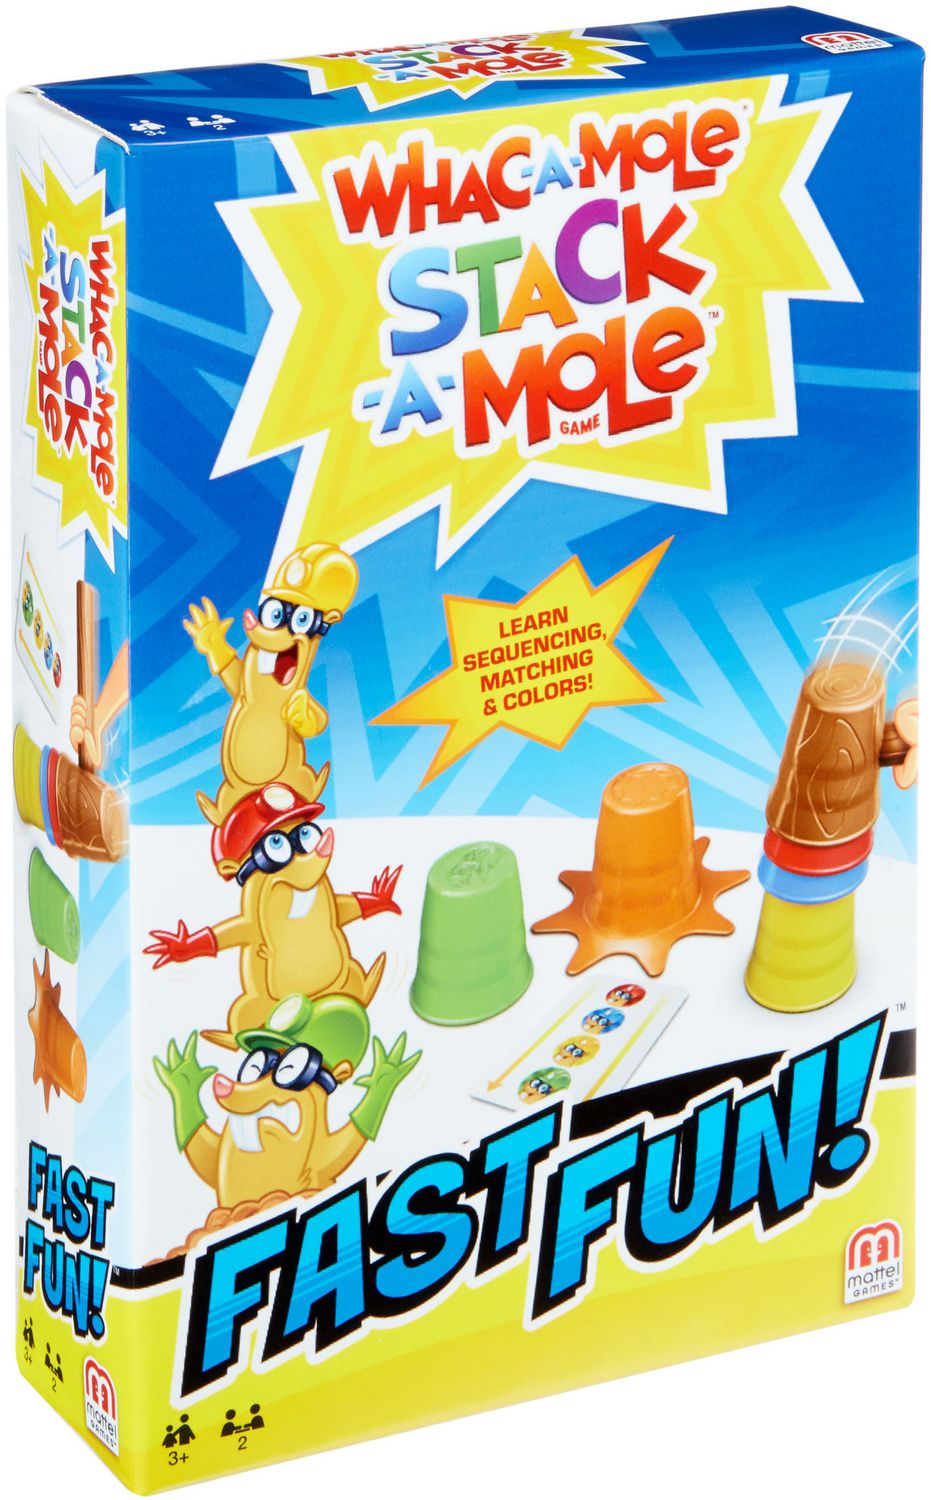 Whac-a-Mole Stack-a-Mole Fast Fun Game